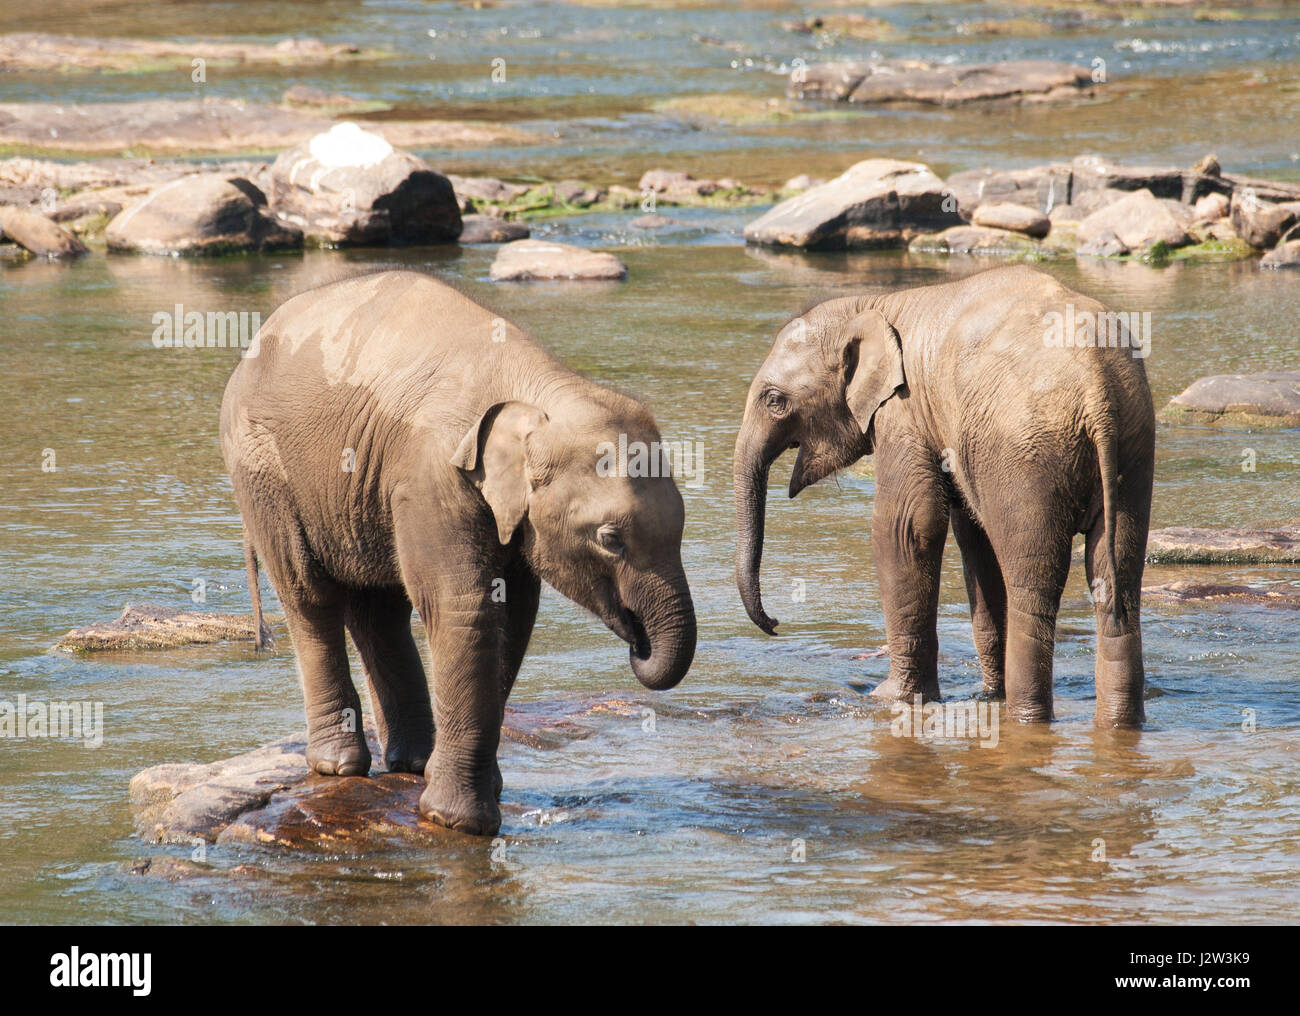 Young asian elephants having bath in river - Elephas maximus Stock Photo